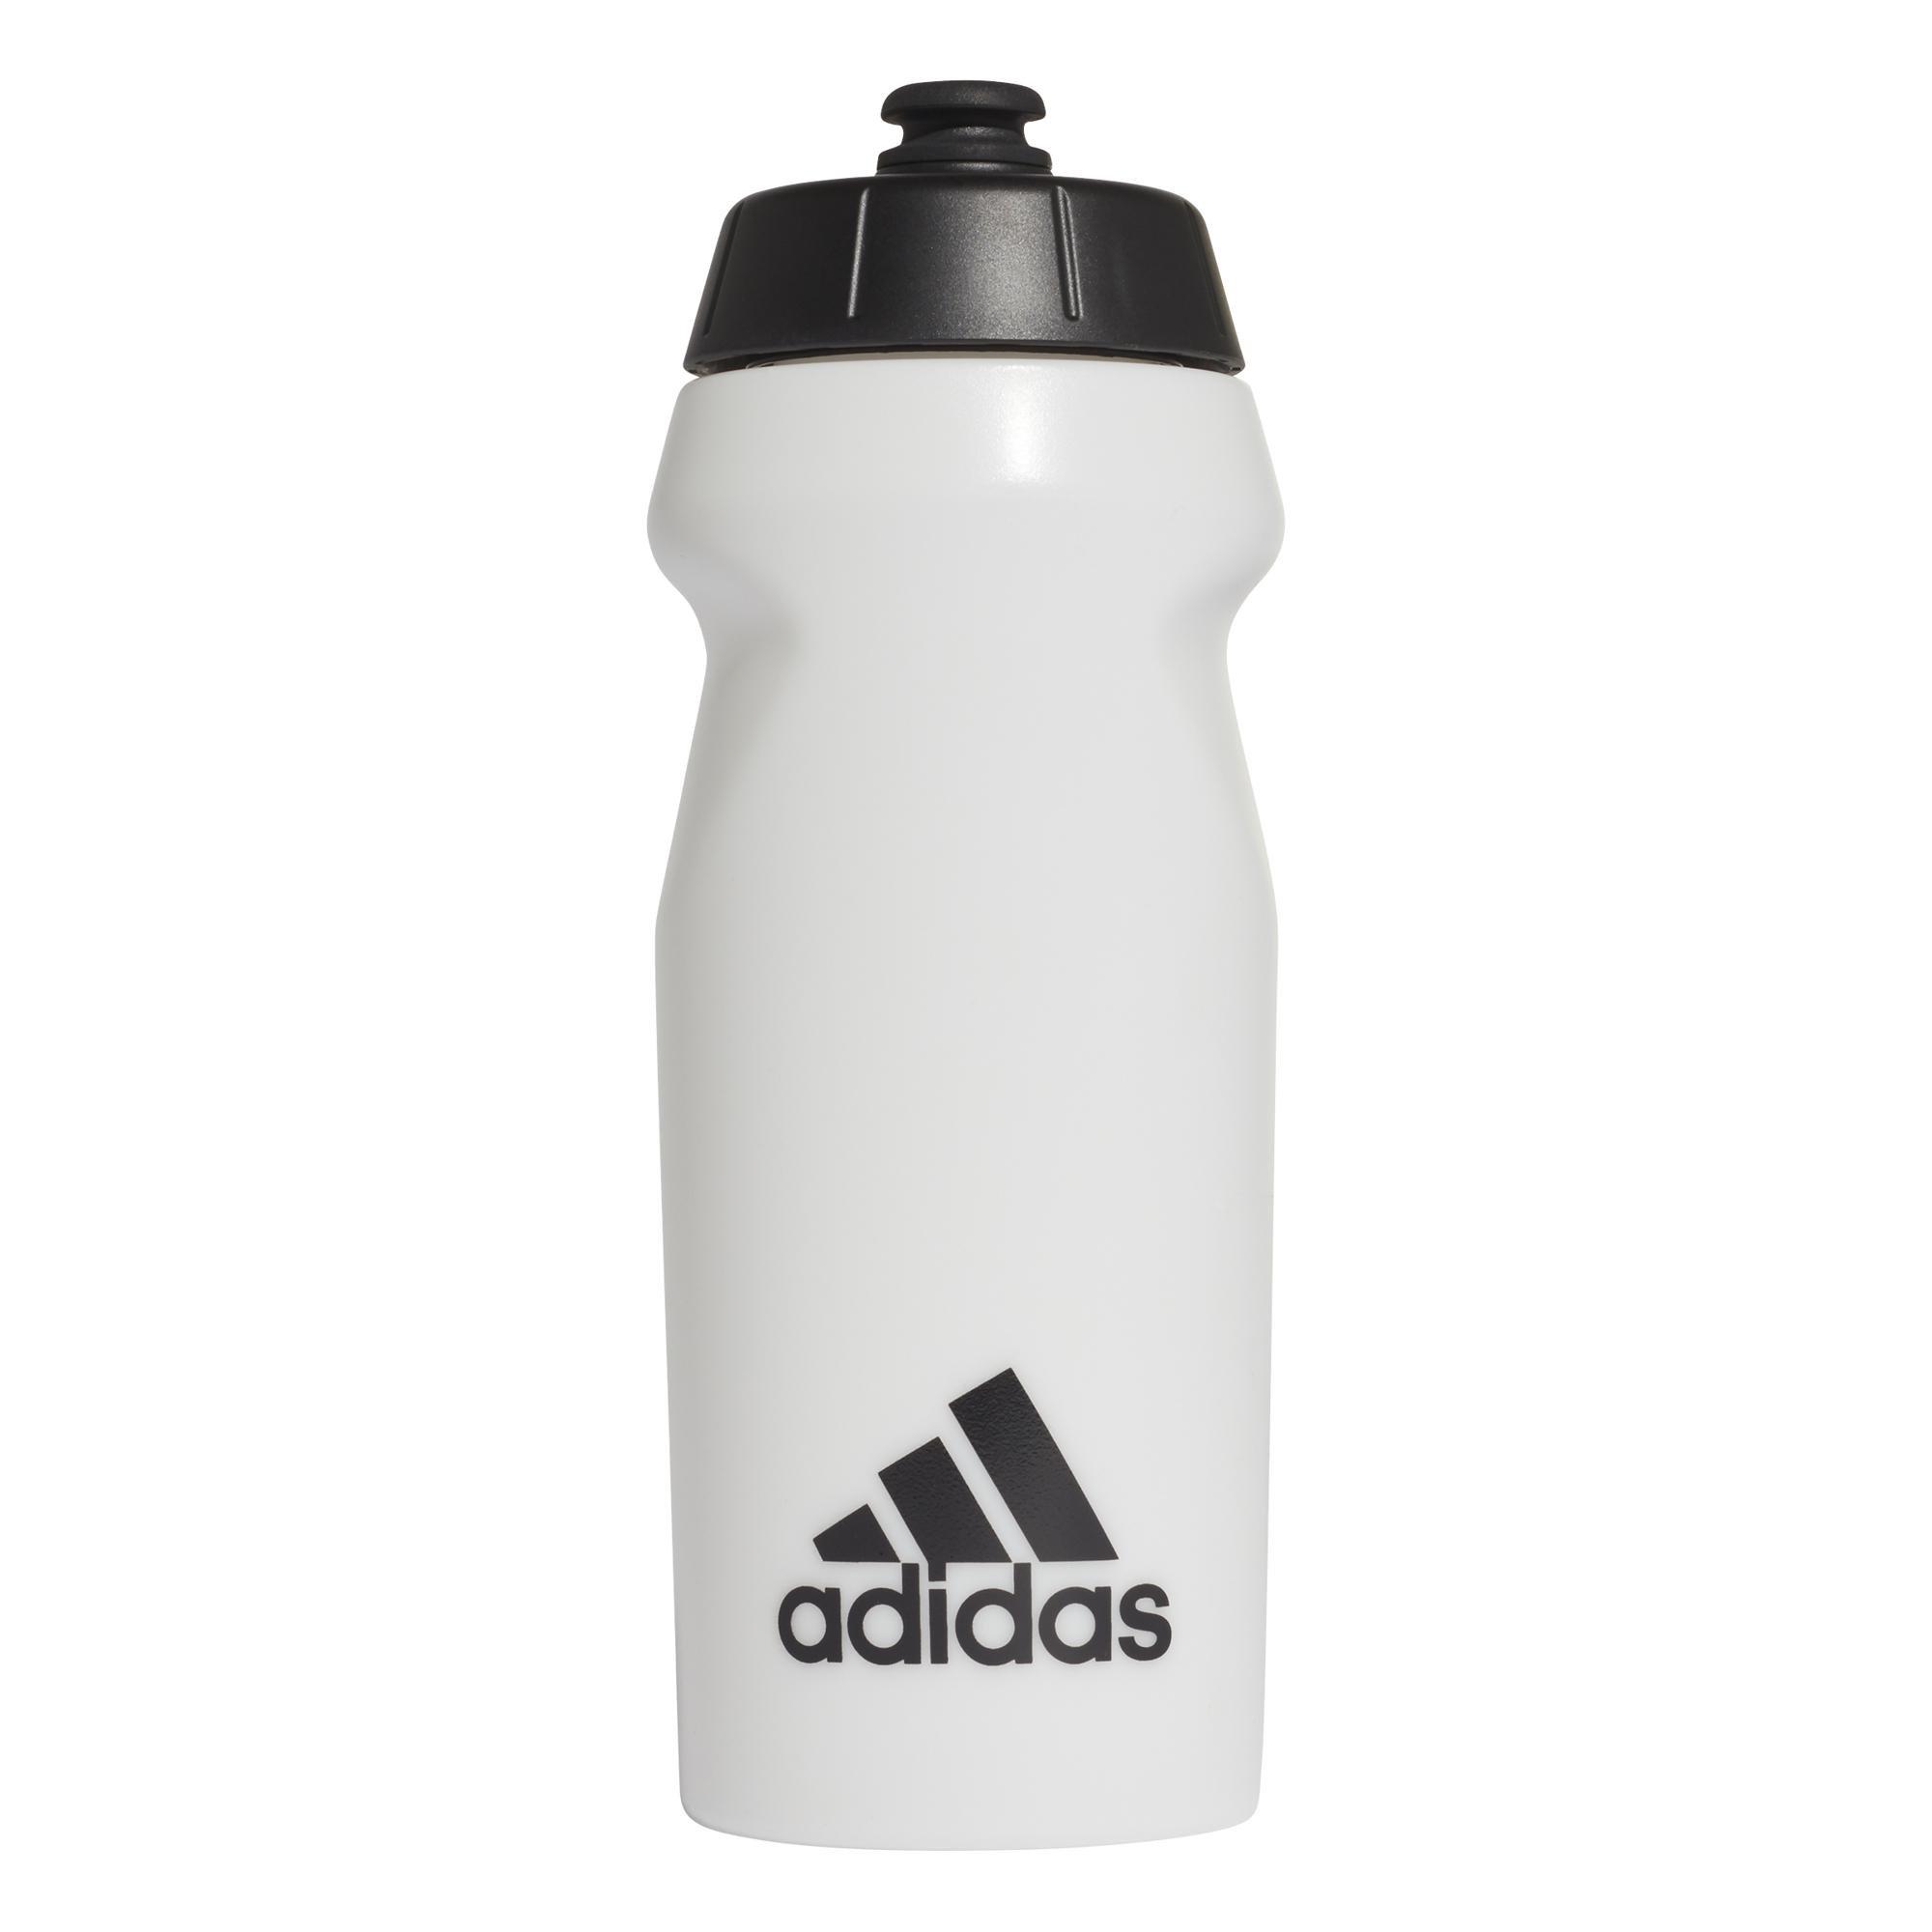 adidas - Unisex Performance Water Bottle 0.5 L, White